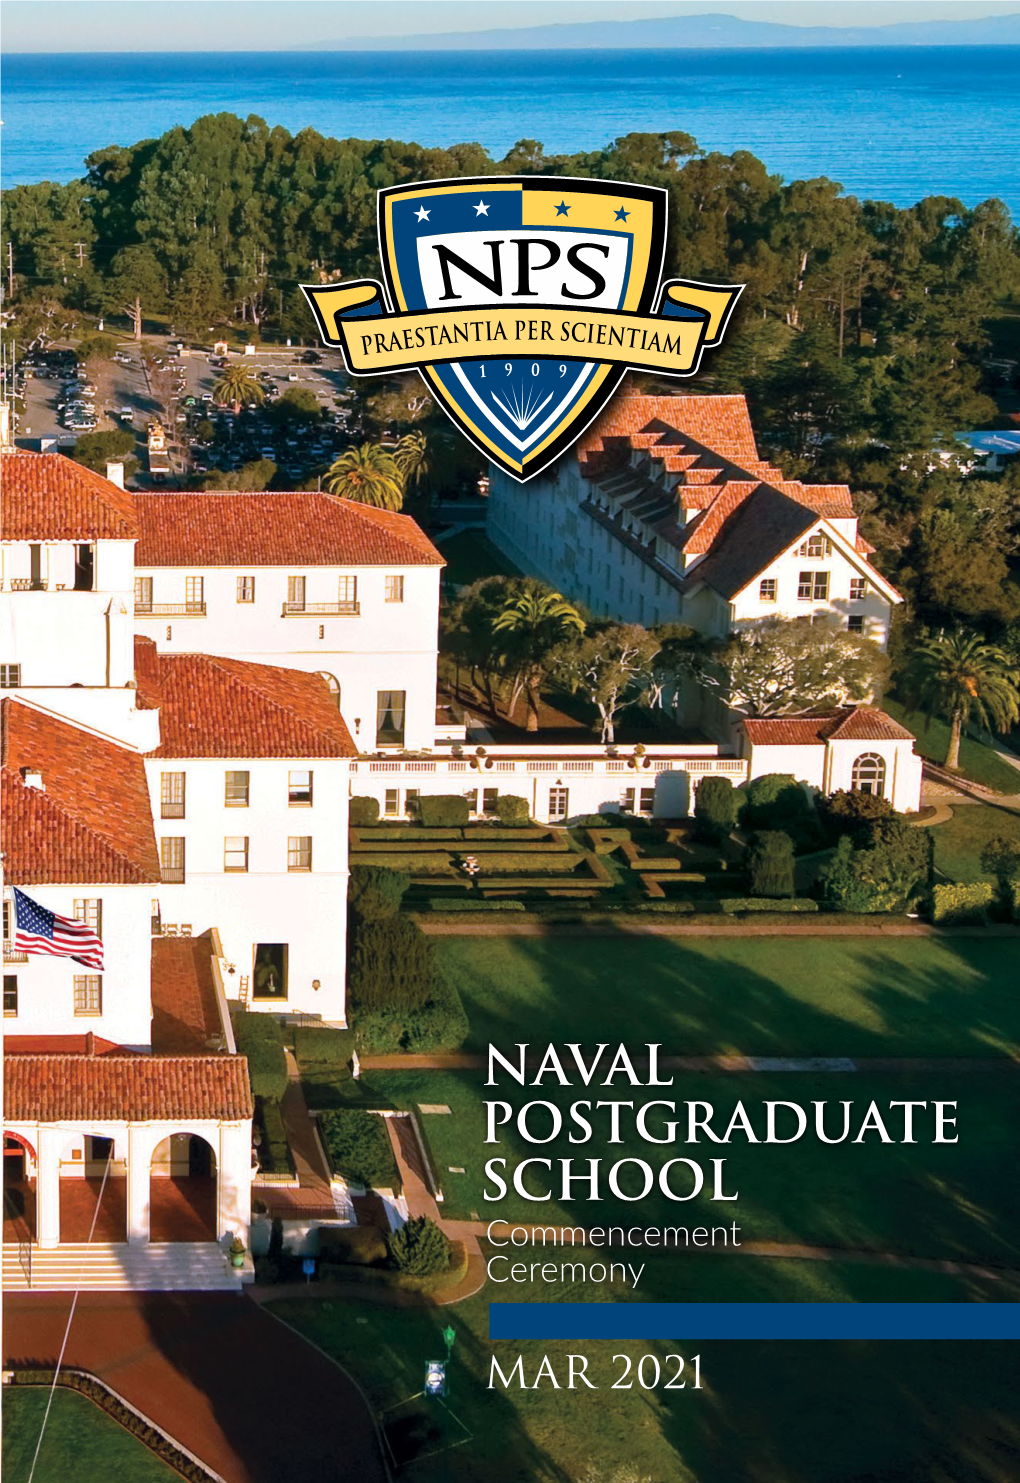 Mar 2021 Naval Postgraduate School